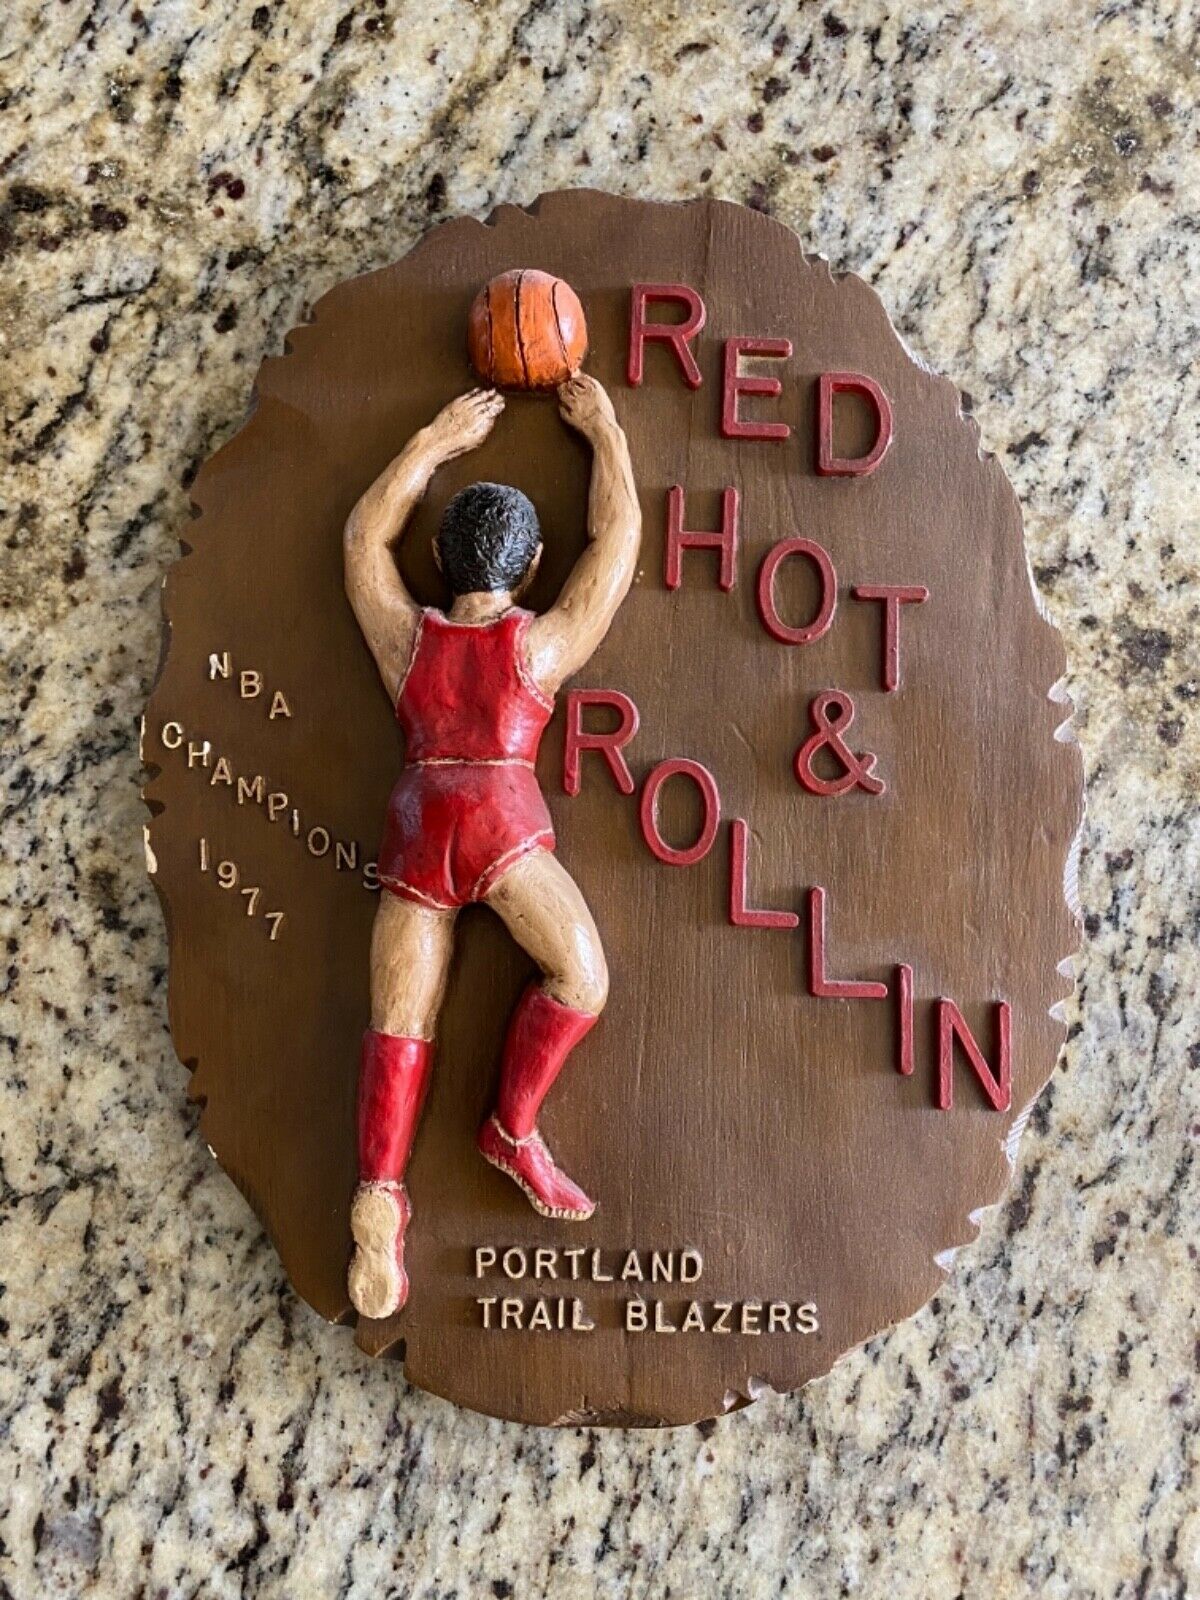 Vintage Portland Trail Blazers Sign - Red Hot & Rollin - Nba Champions 1977